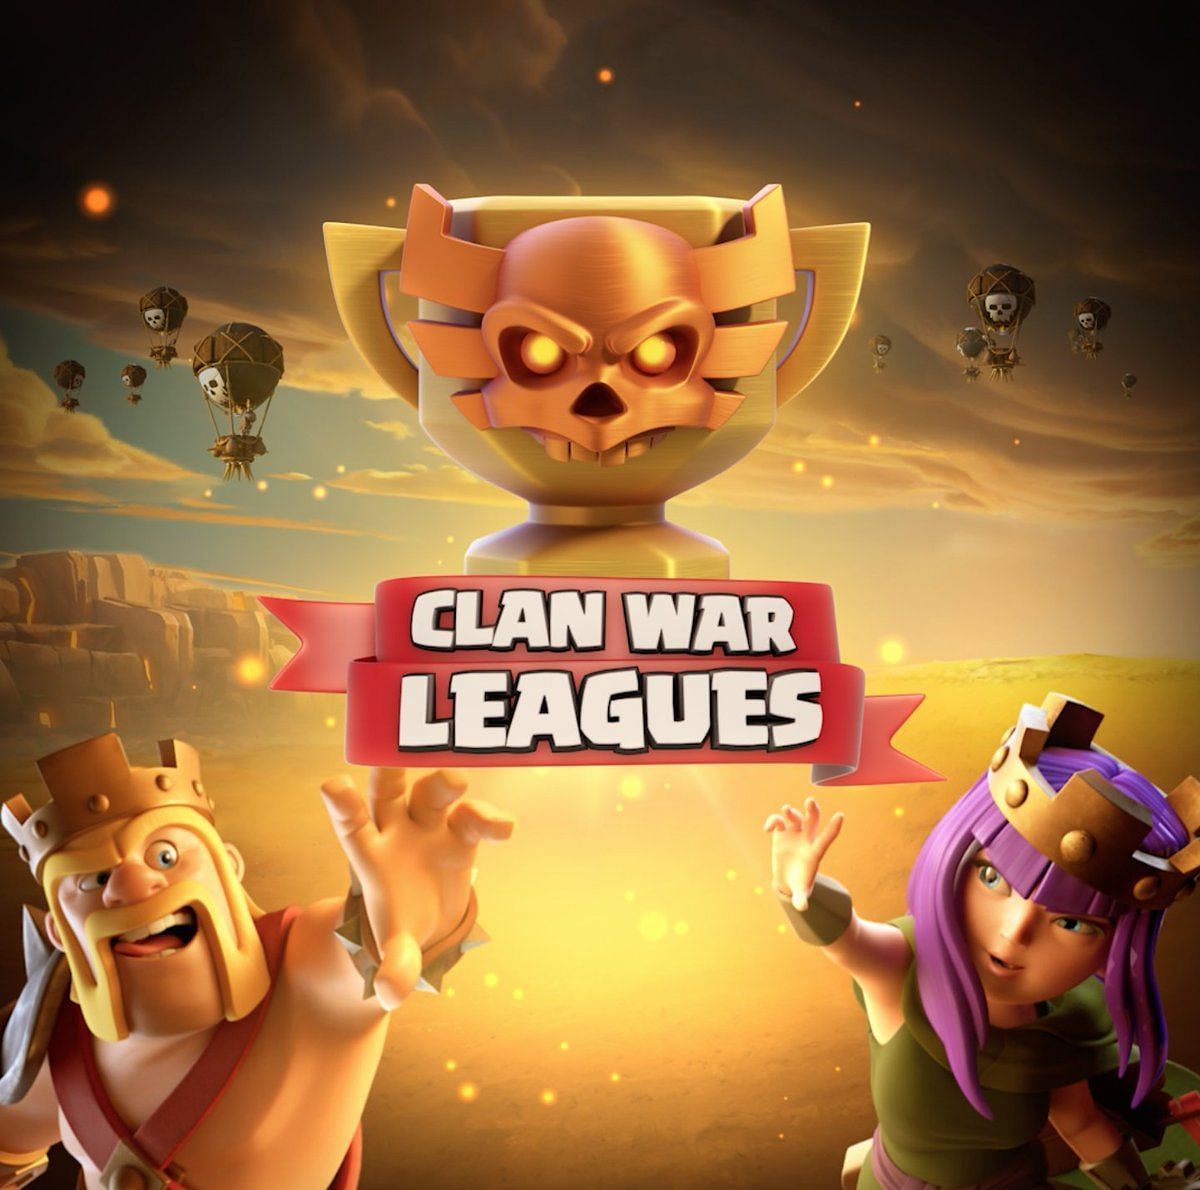 Clash of Clans Clan War League (Image via Clash of Clans)